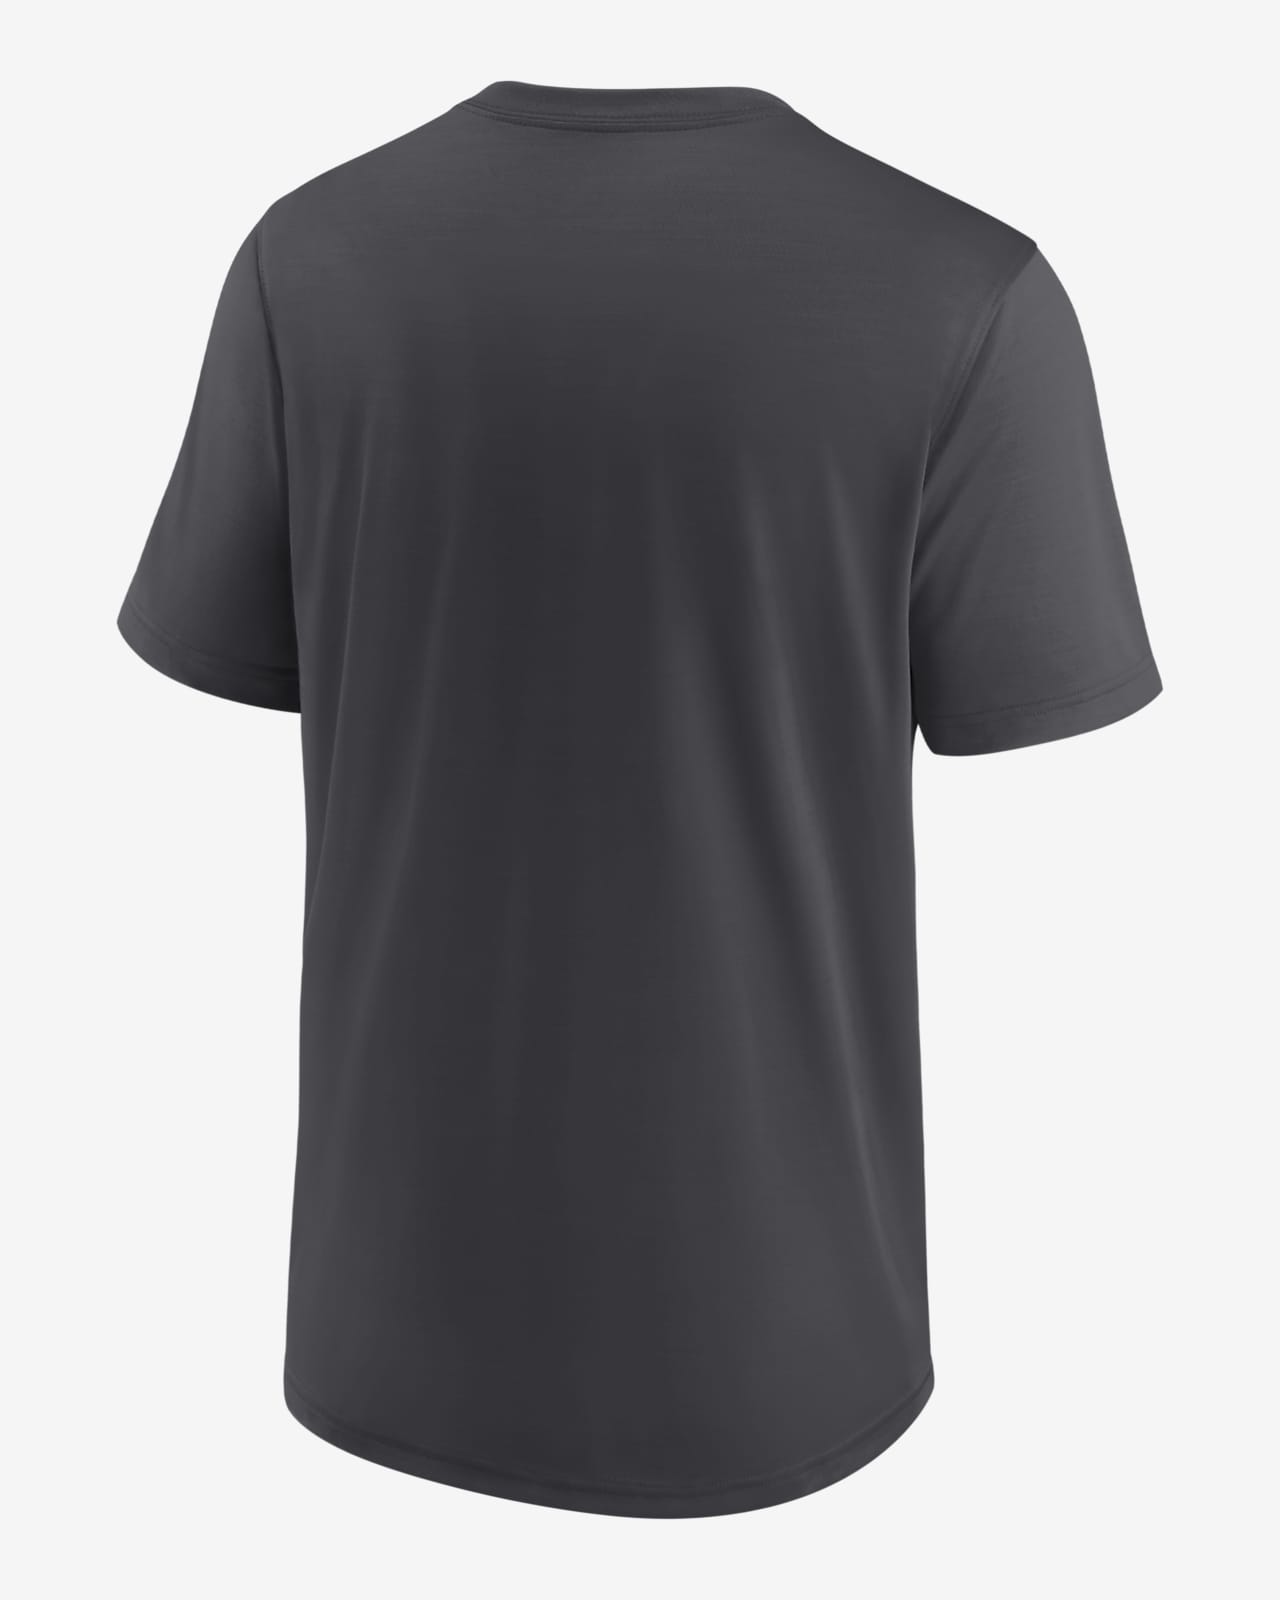 Nike Dri-FIT Game (MLB Chicago Cubs) Men's Long-Sleeve T-Shirt